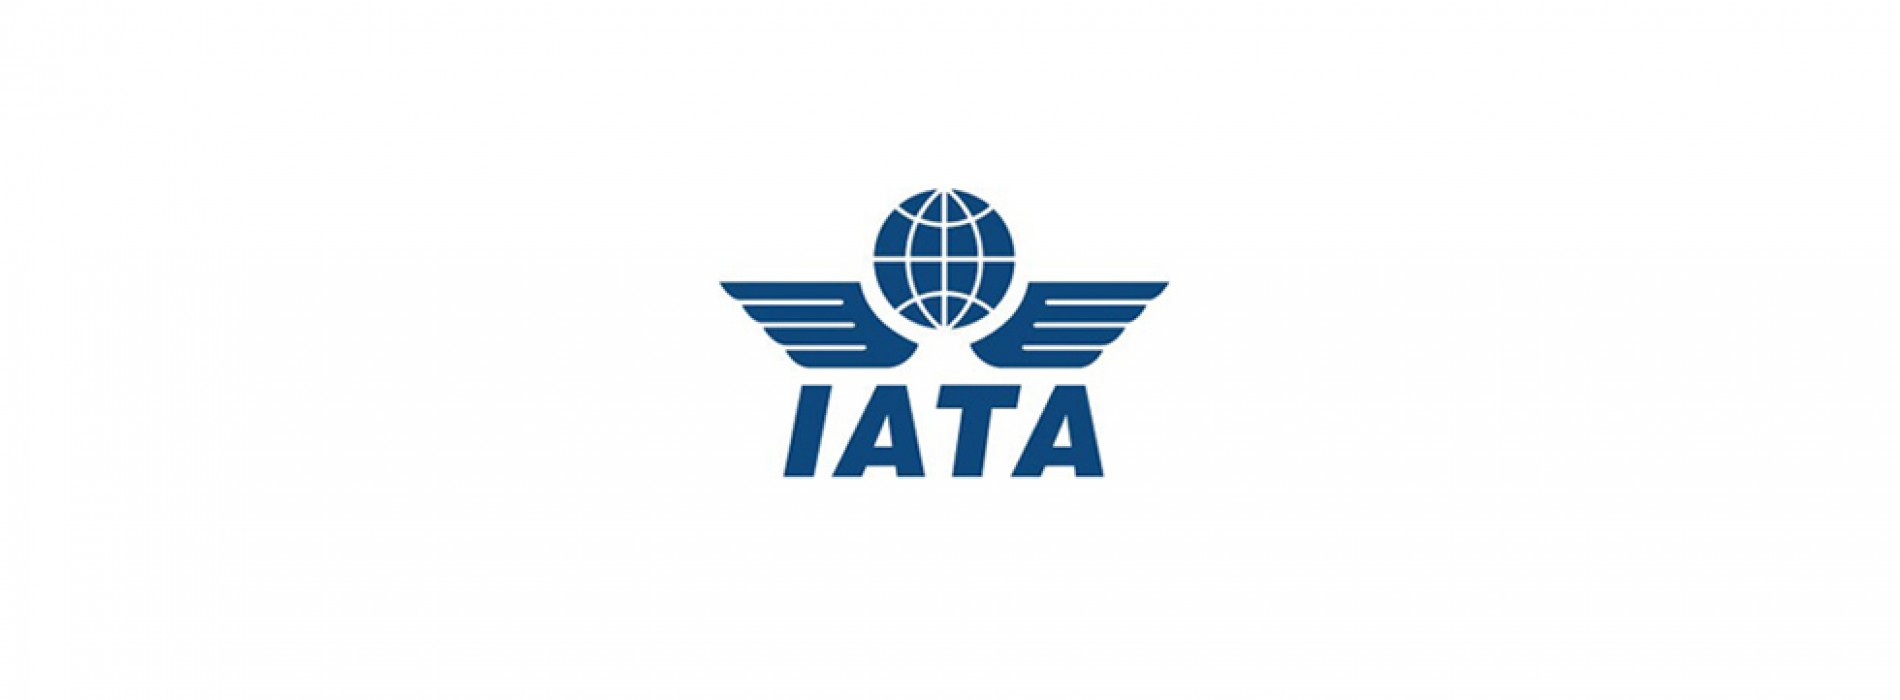 India’s 2016 domestic passenger traffic up more than 23%: IATA